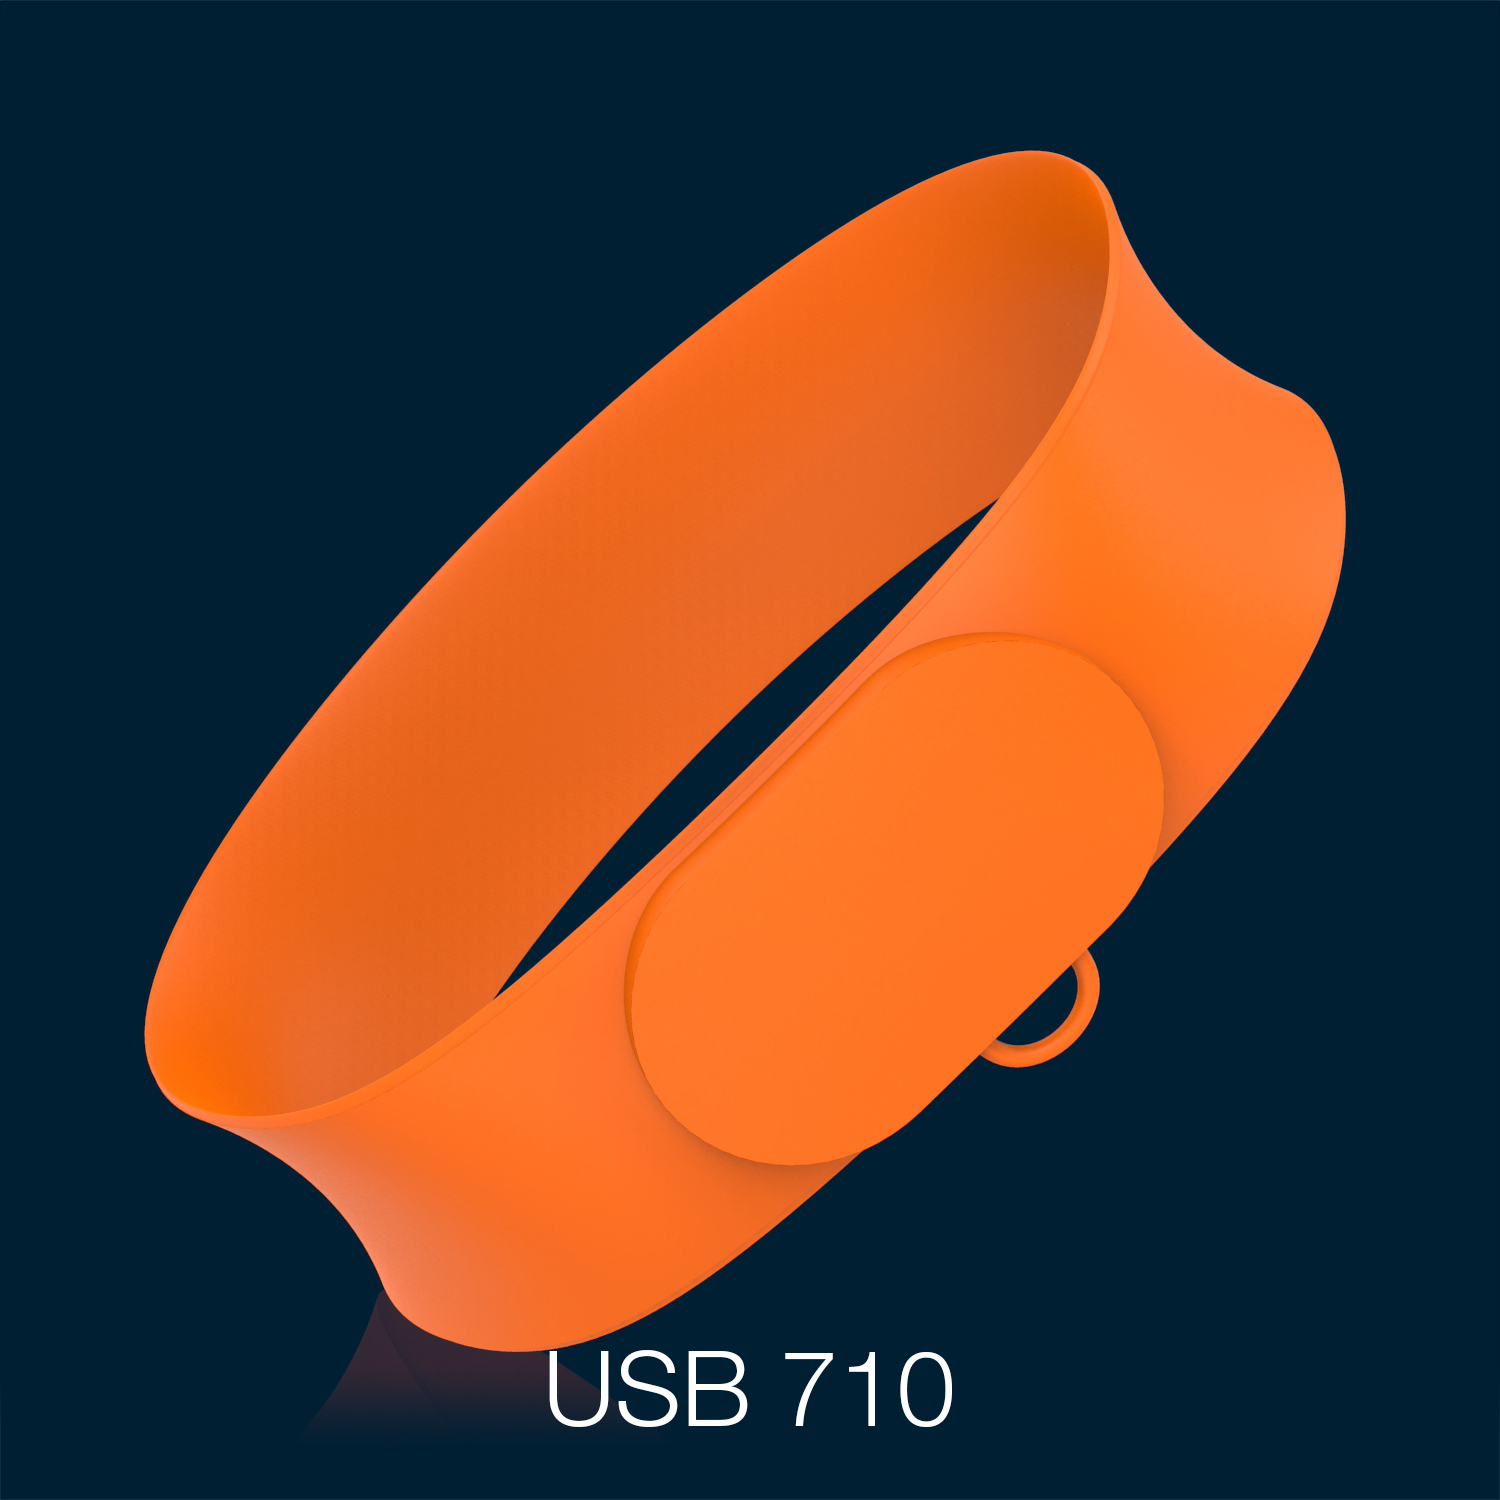 USB 710